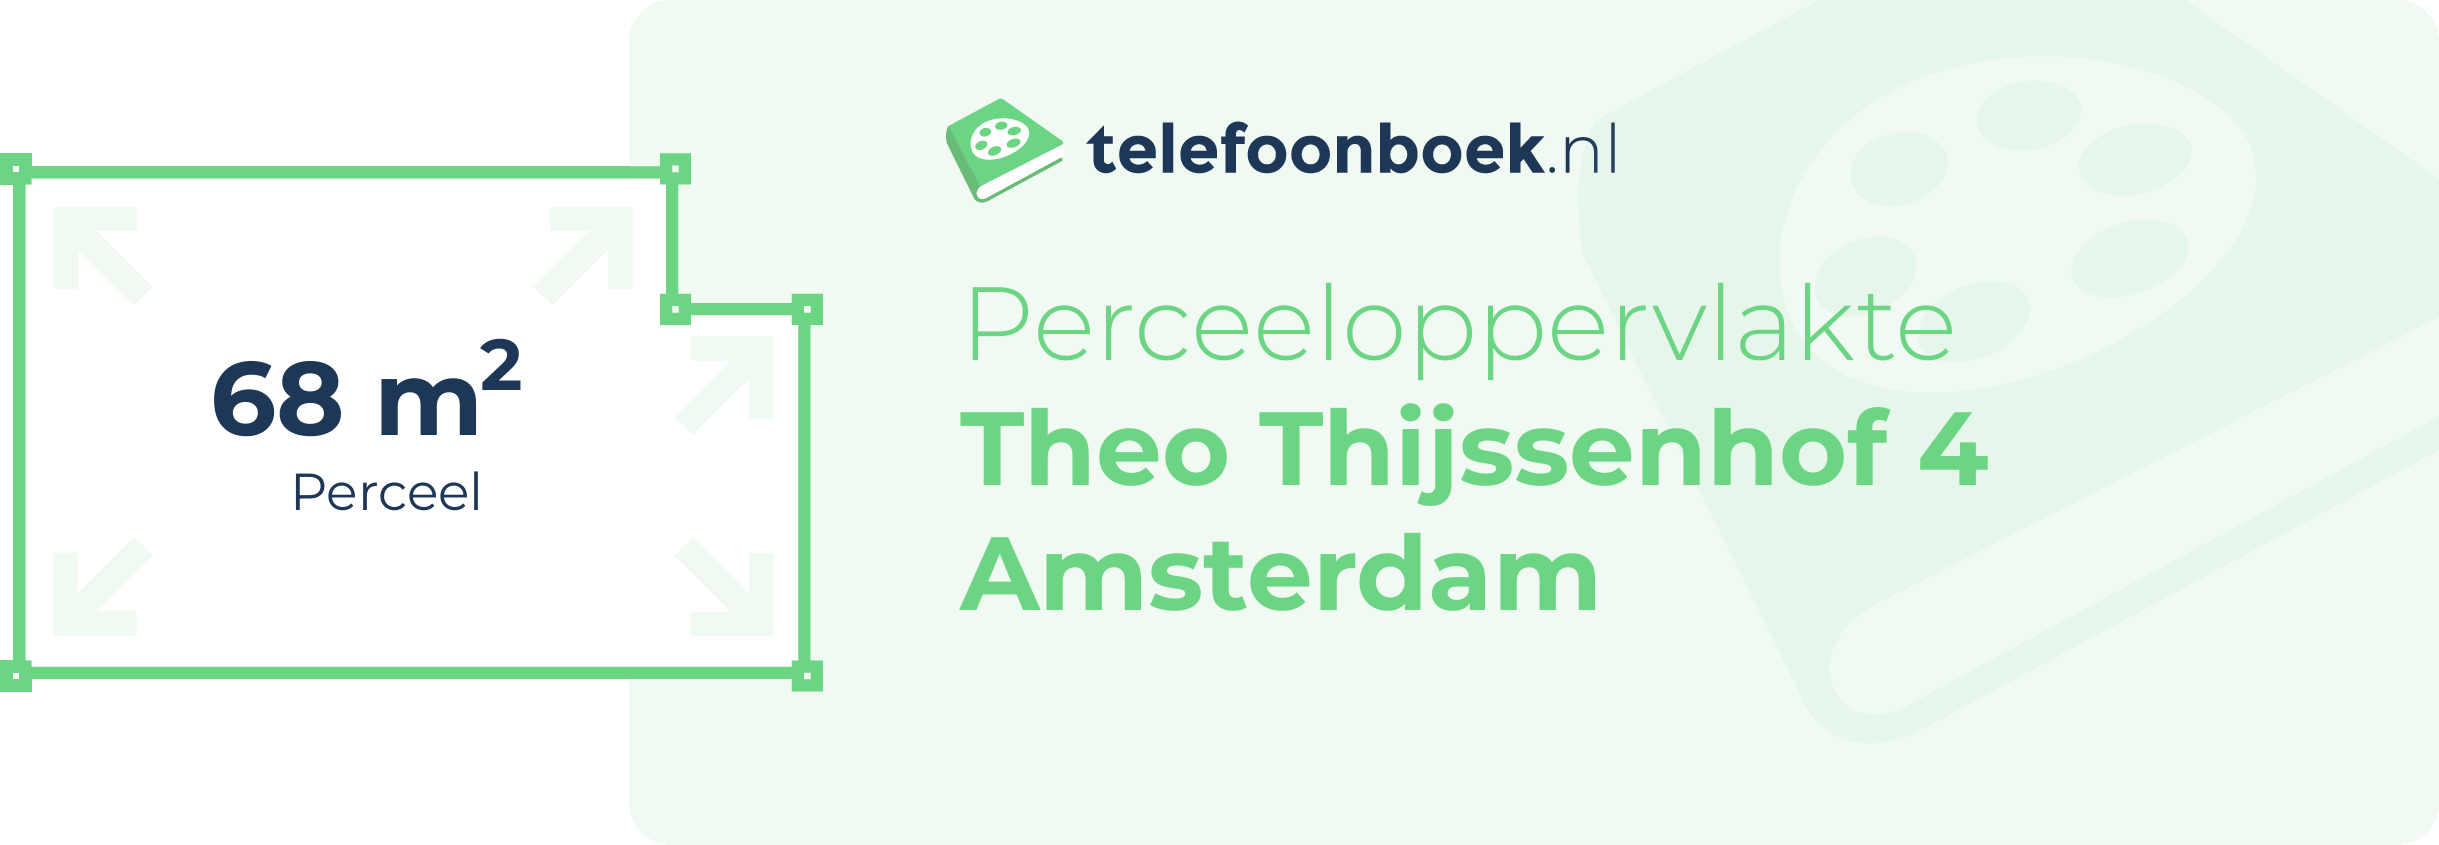 Perceeloppervlakte Theo Thijssenhof 4 Amsterdam